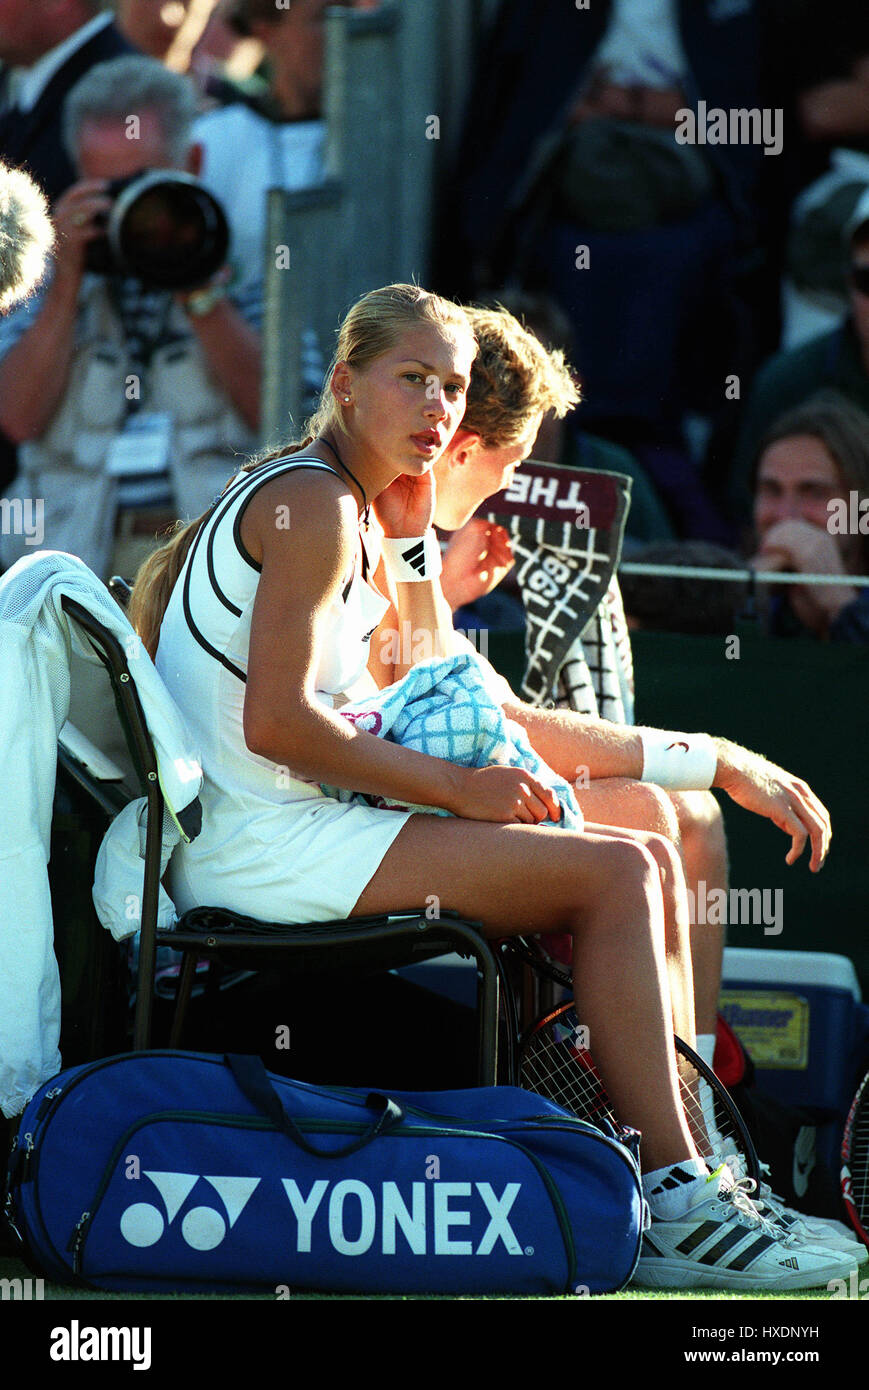 Anna Kournikova Wimbledon 1999 24 Juni 1999 Stockfotografie Alamy